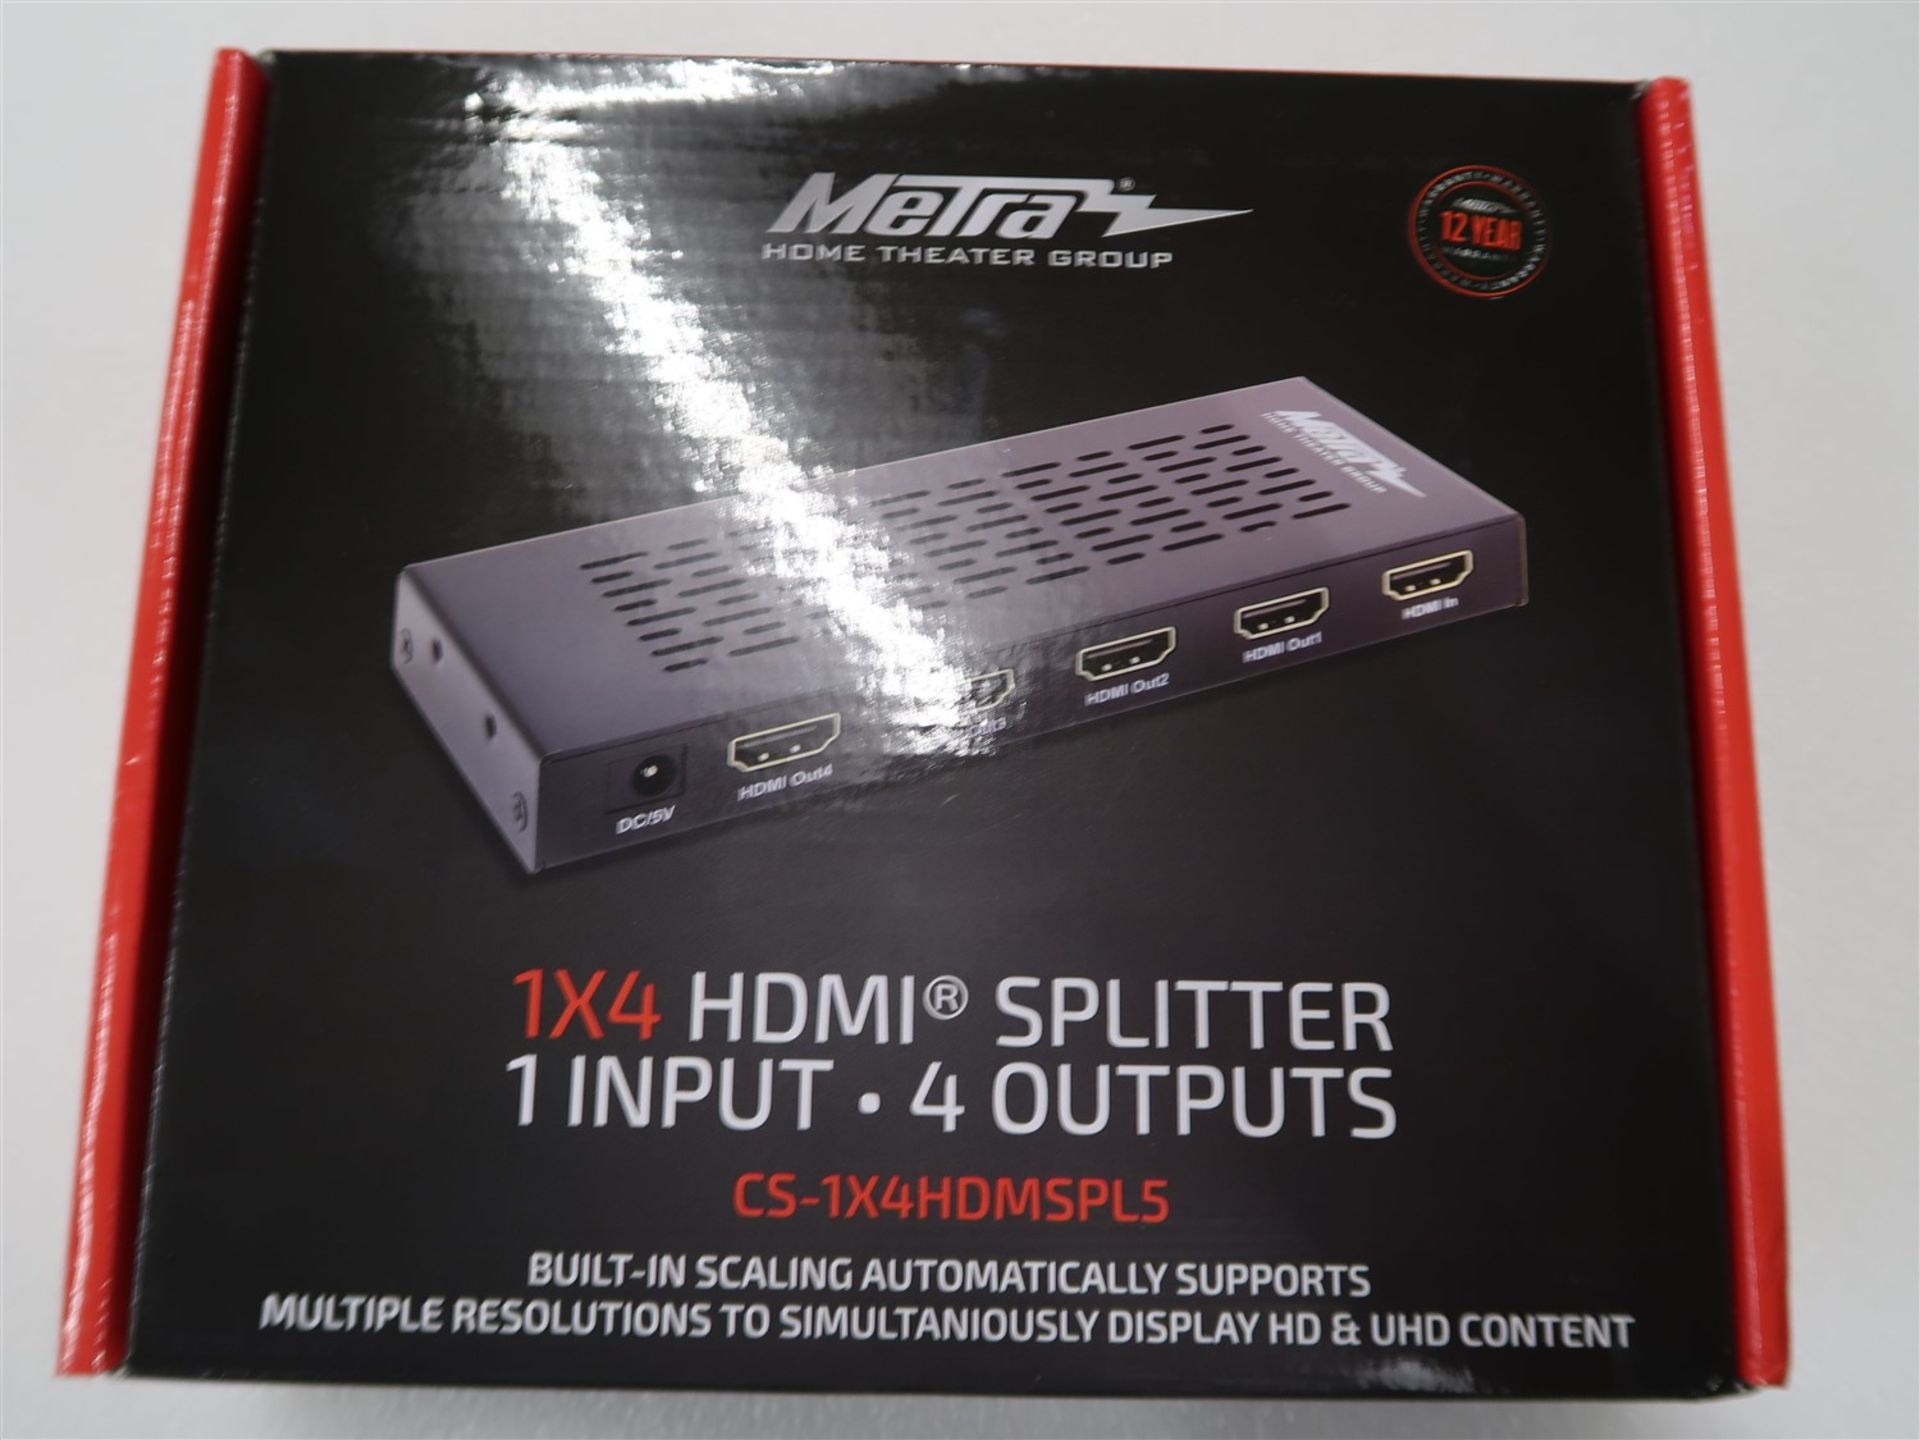 METRA 1X4 HDMI SPLITTER, 1 INPUT 4 OUTPUT CS-1X4 HDMSPL5, (BNIB) - Image 2 of 2